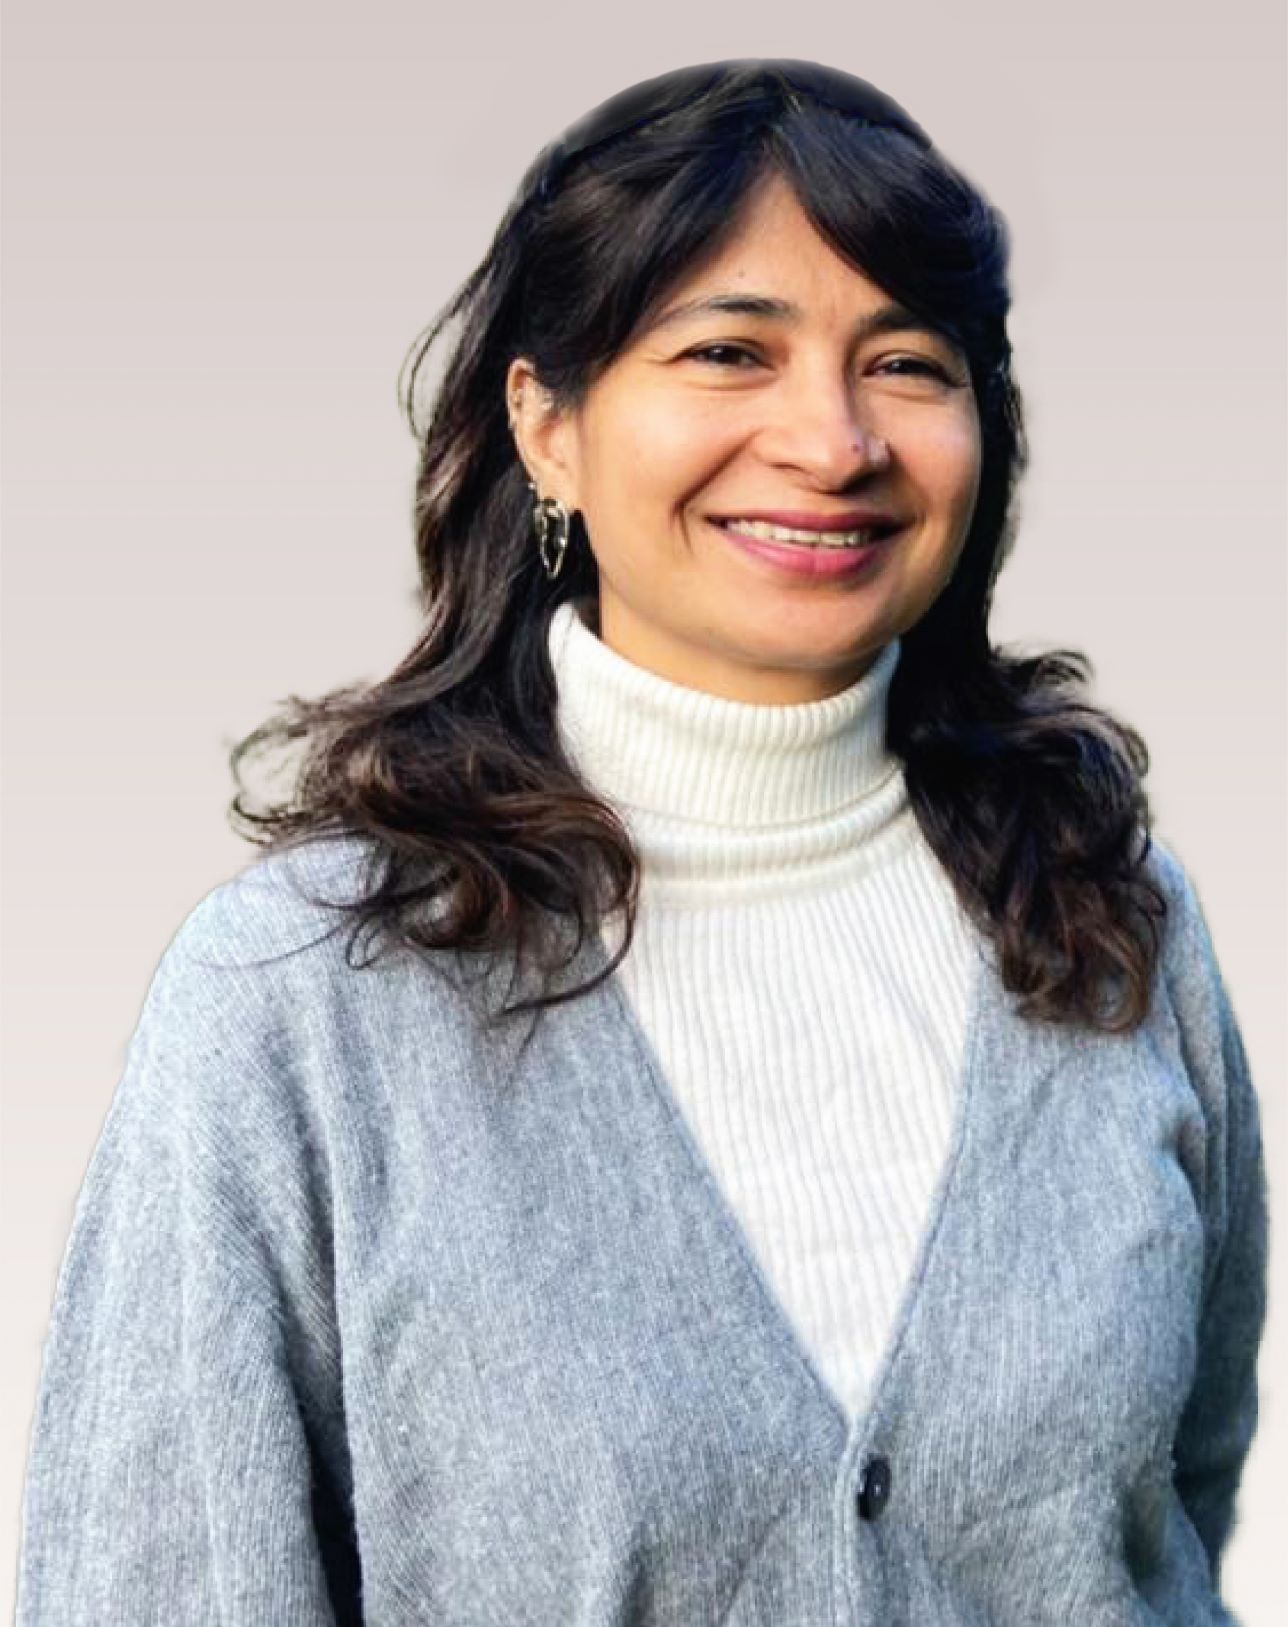 Nandini Bhupat